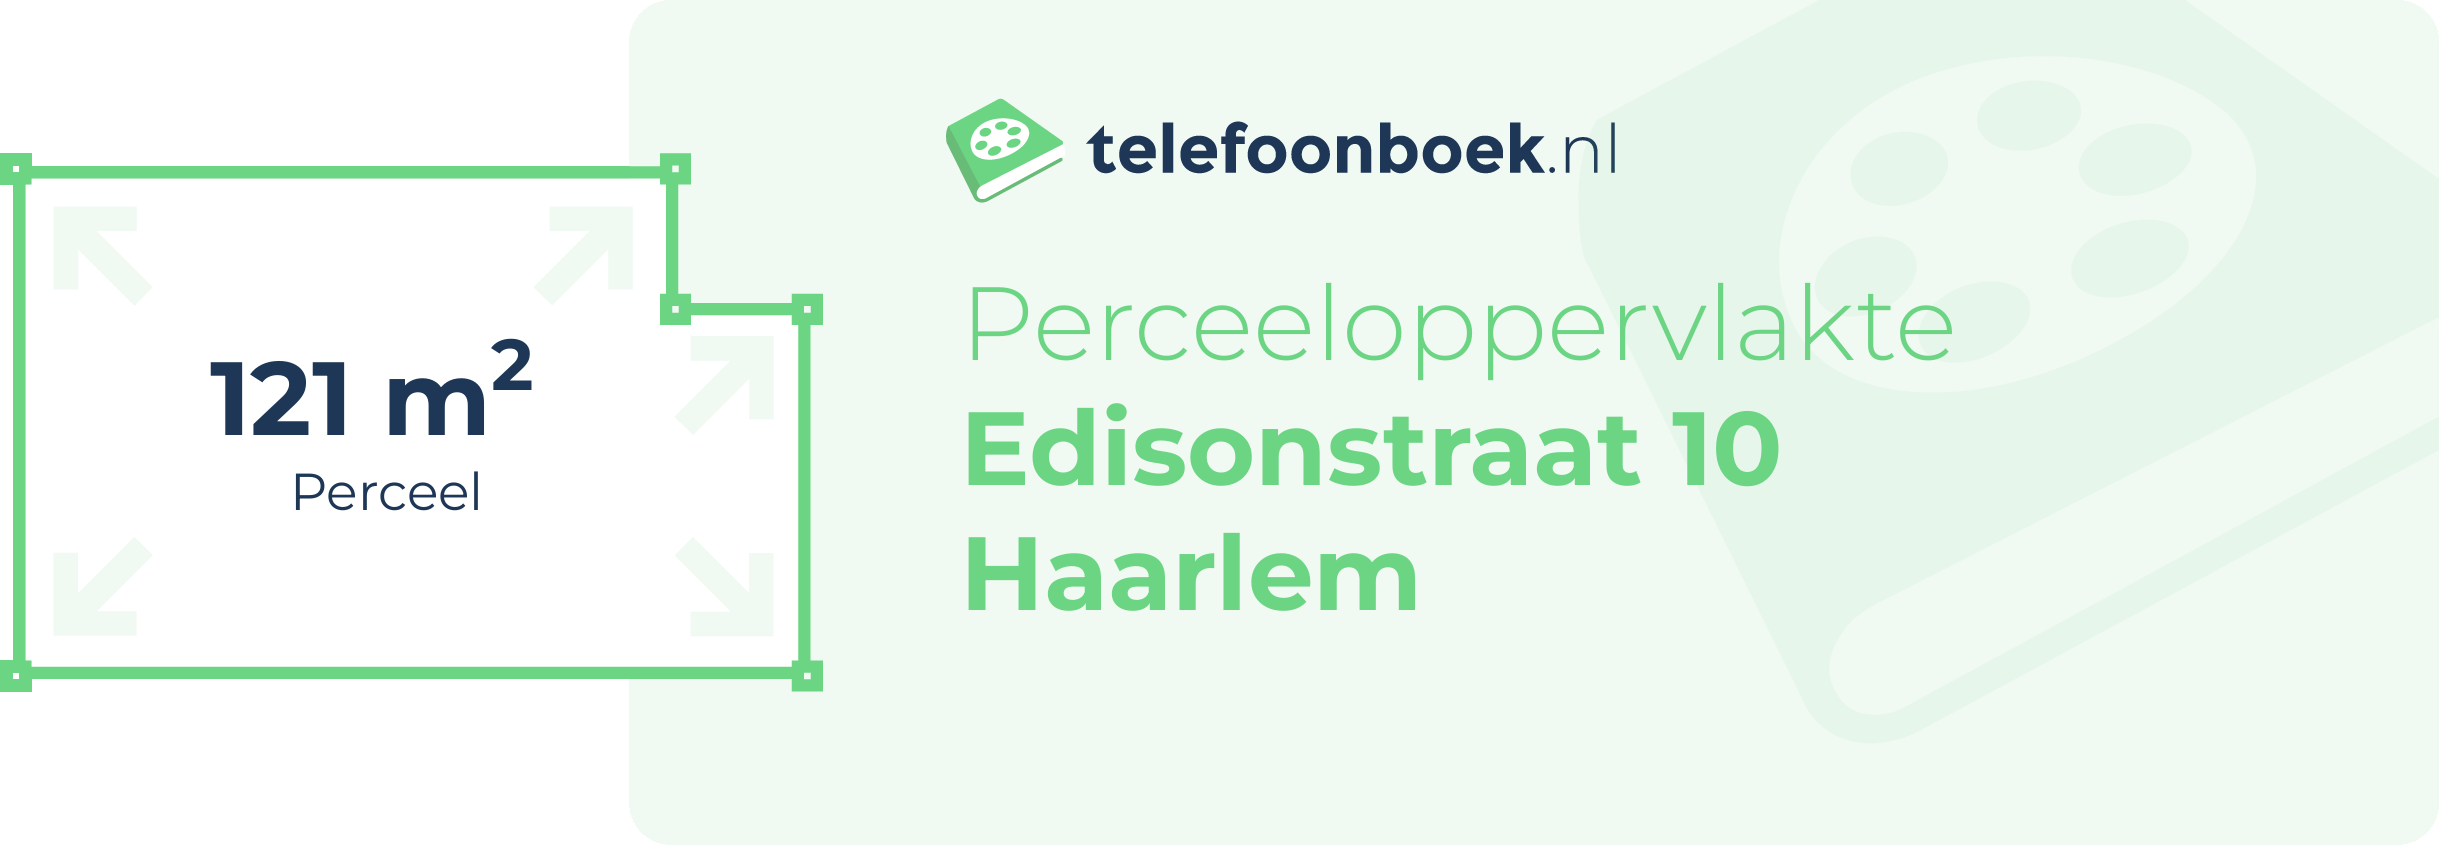 Perceeloppervlakte Edisonstraat 10 Haarlem